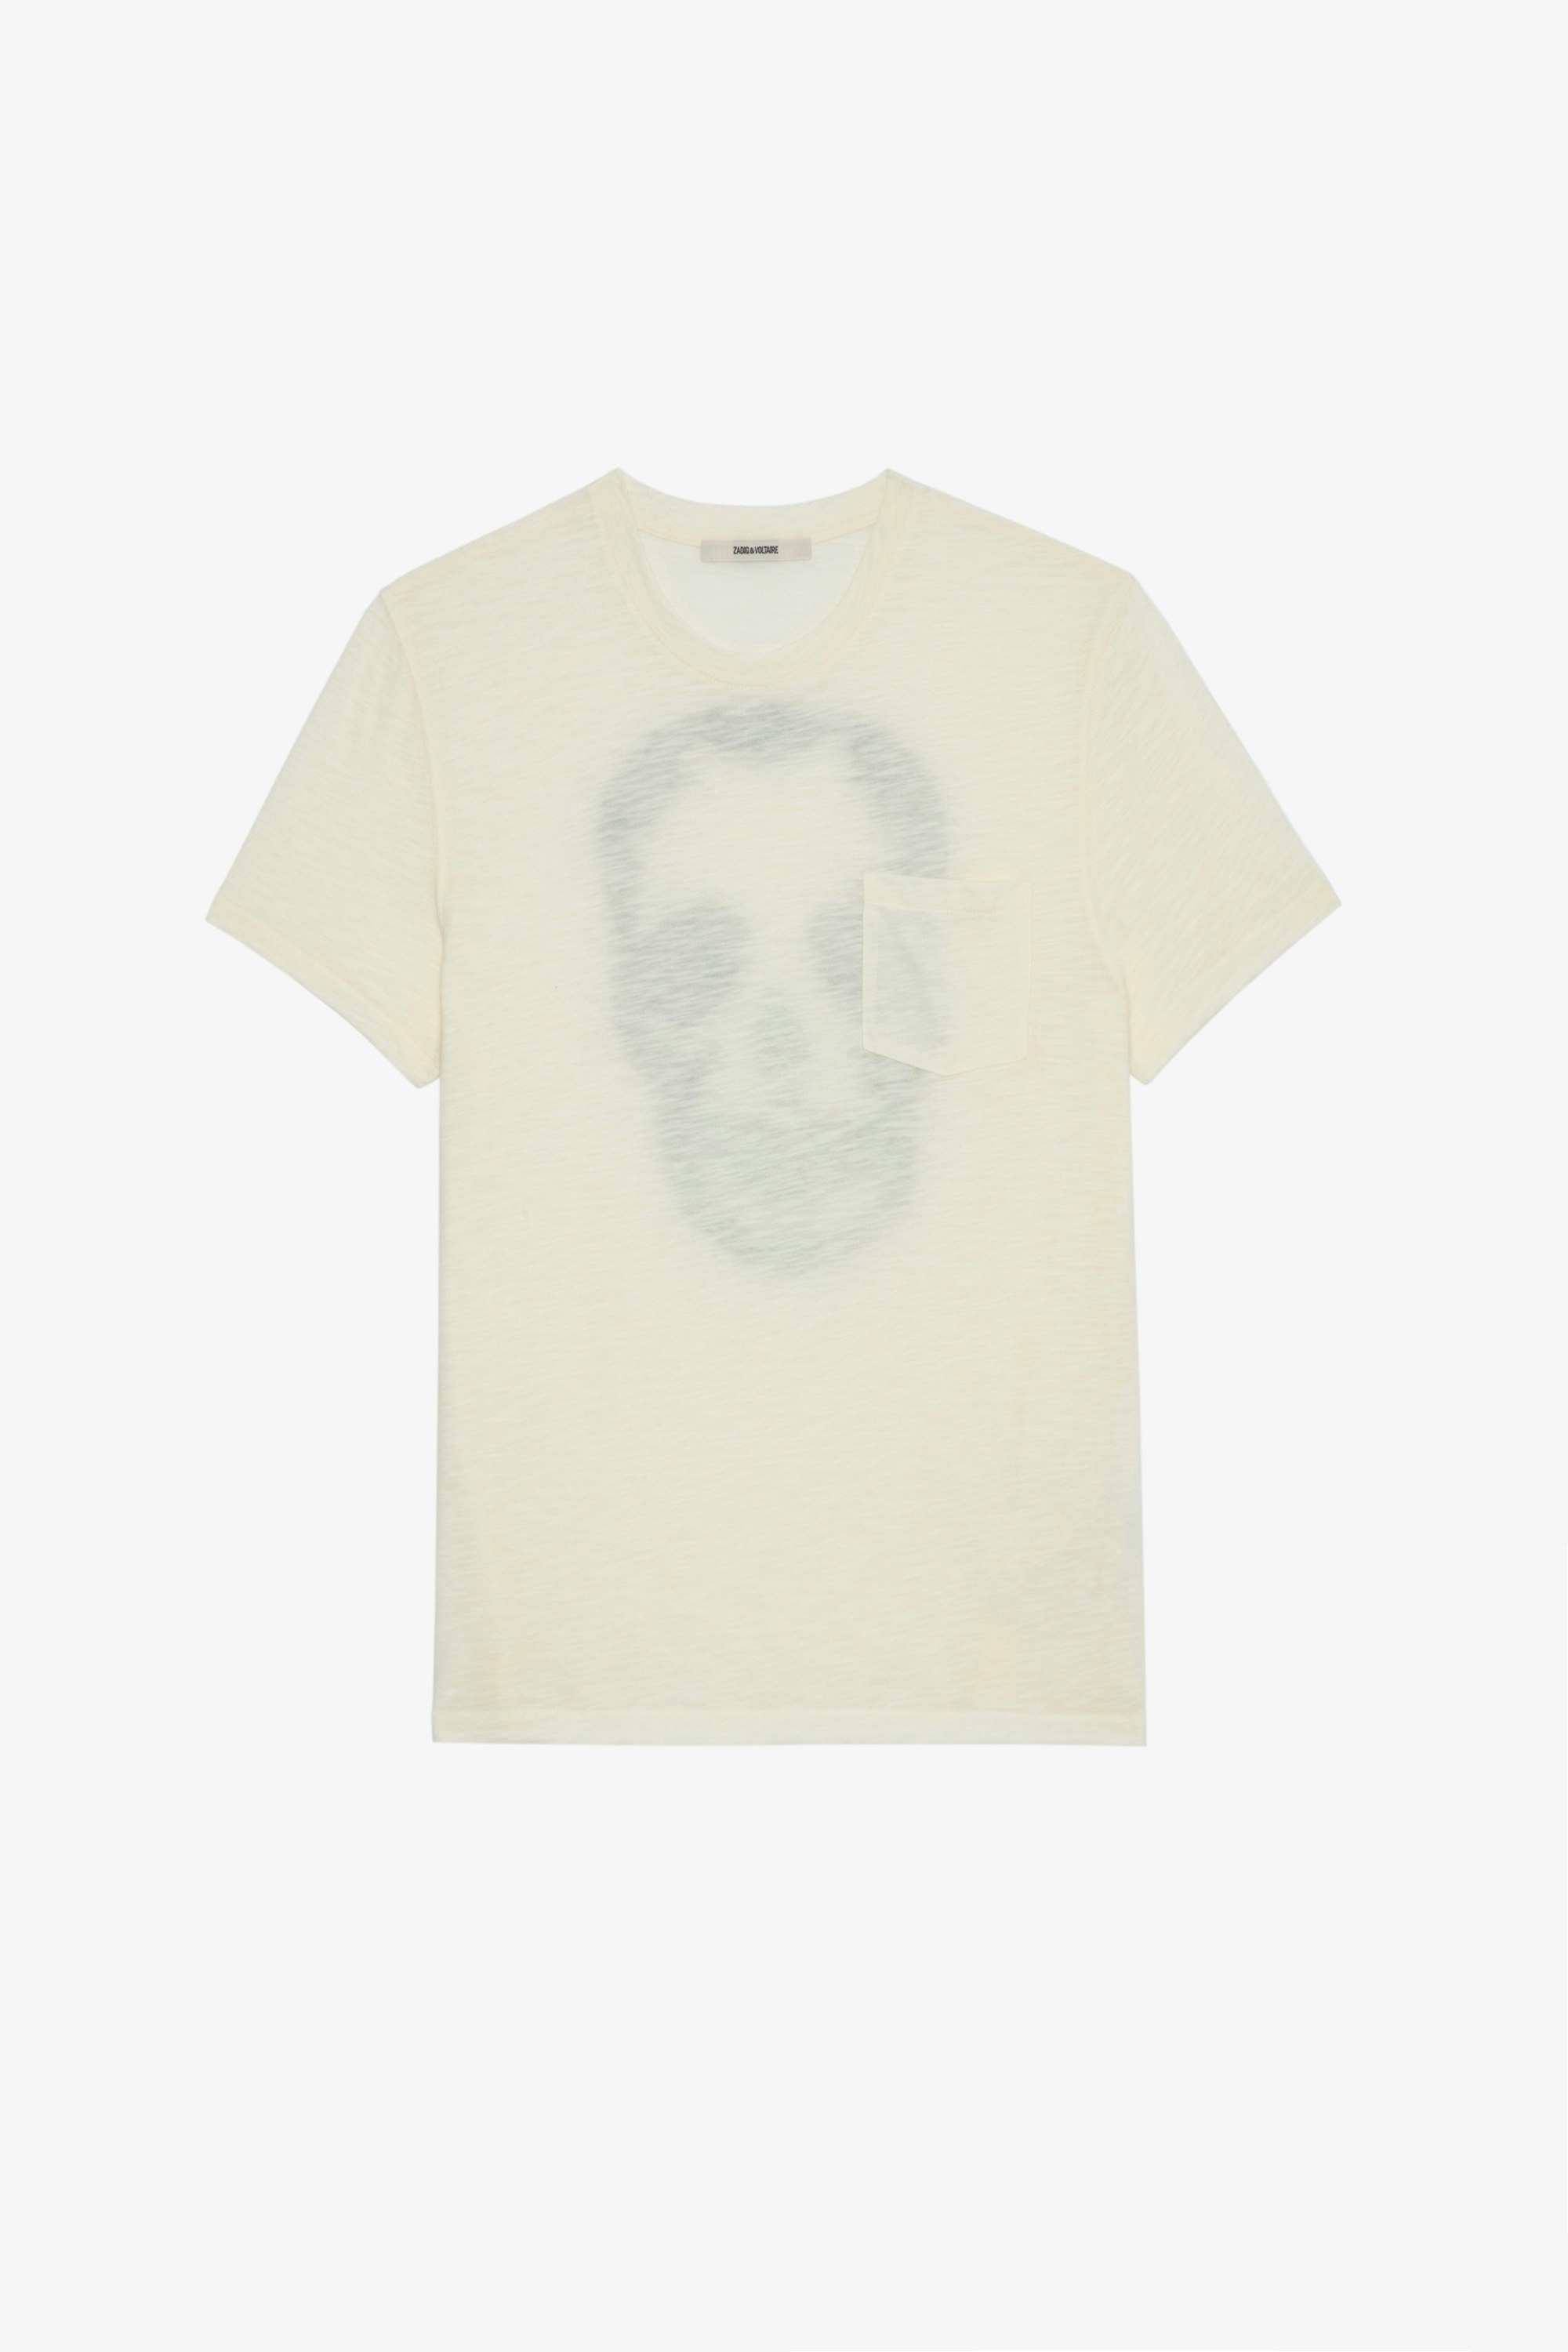 Stockholm Slub Ｔシャツ Men’s ecru slub cotton T-shirt with skull on back